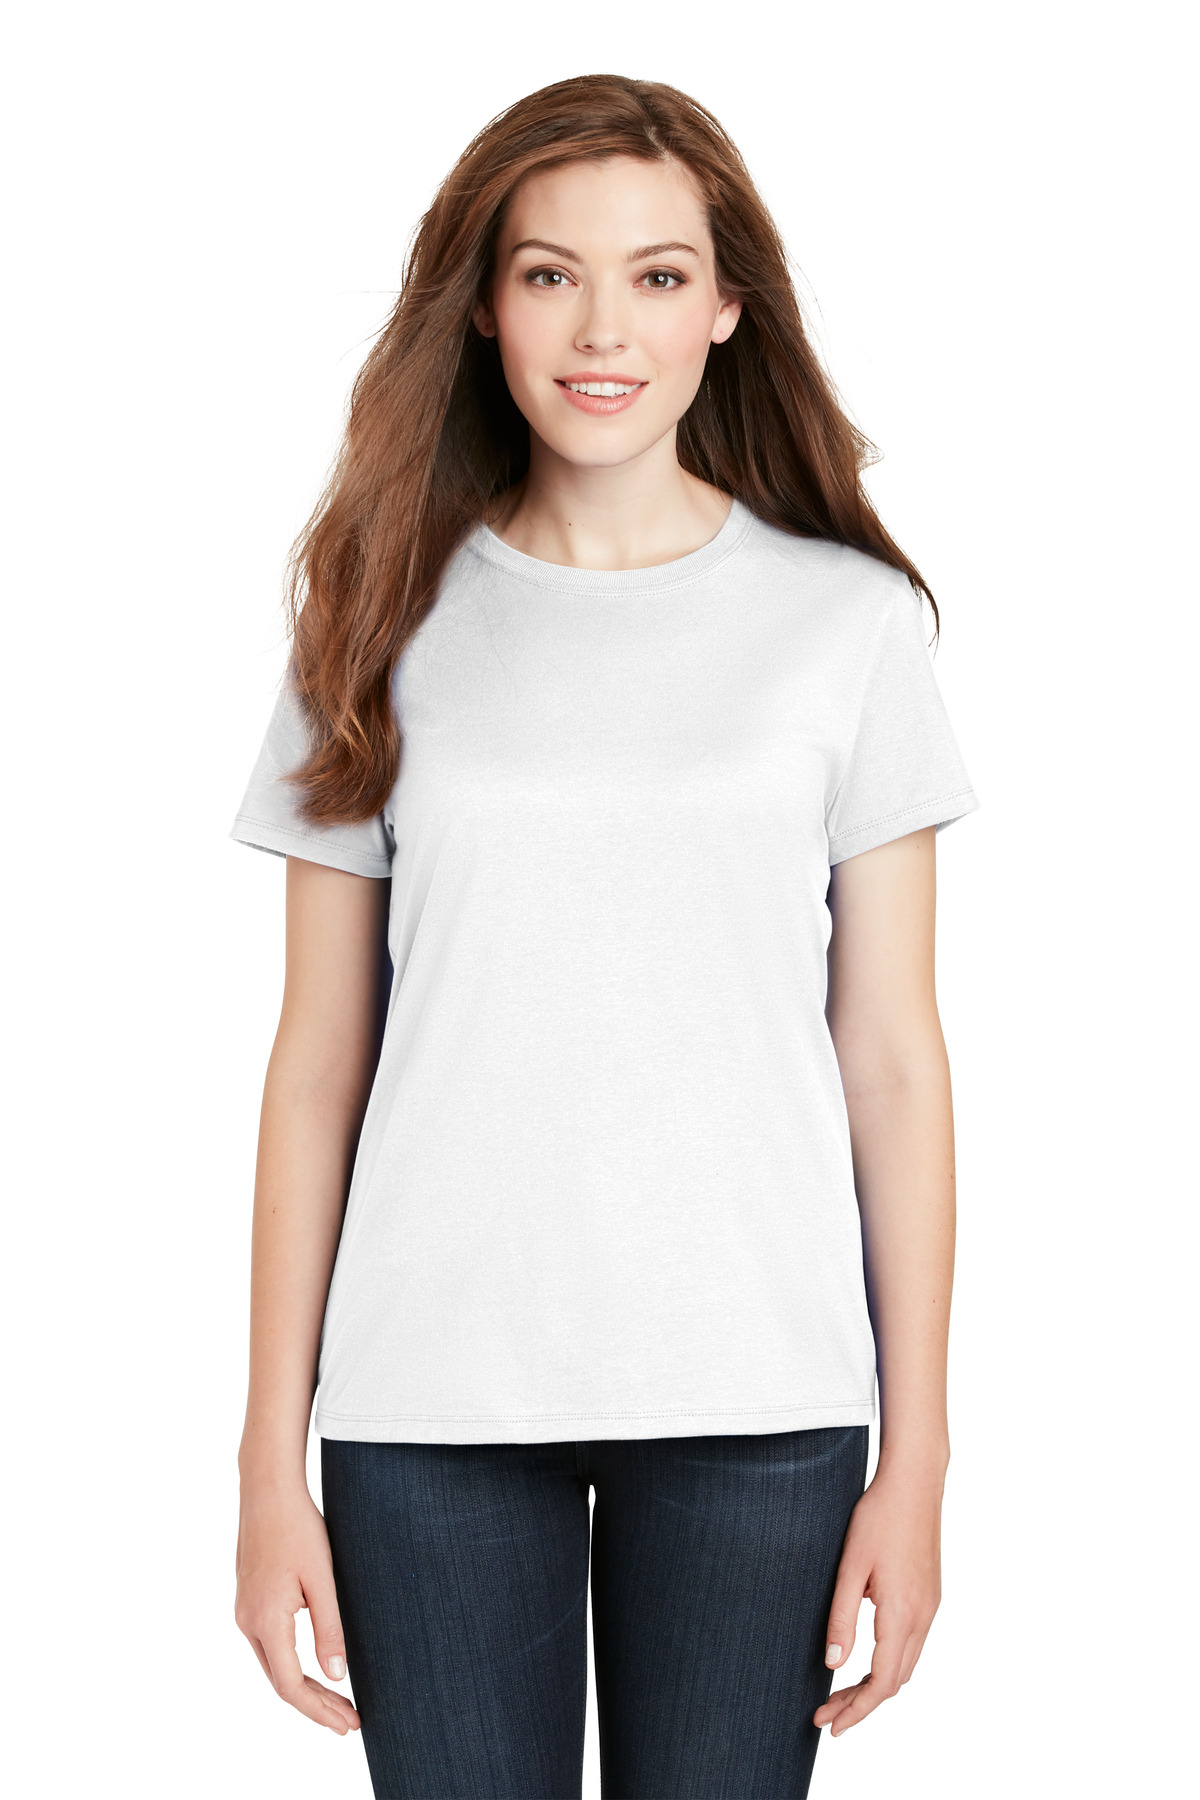 Hanes - Ladies Perfect-T Cotton T-Shirt-Hanes